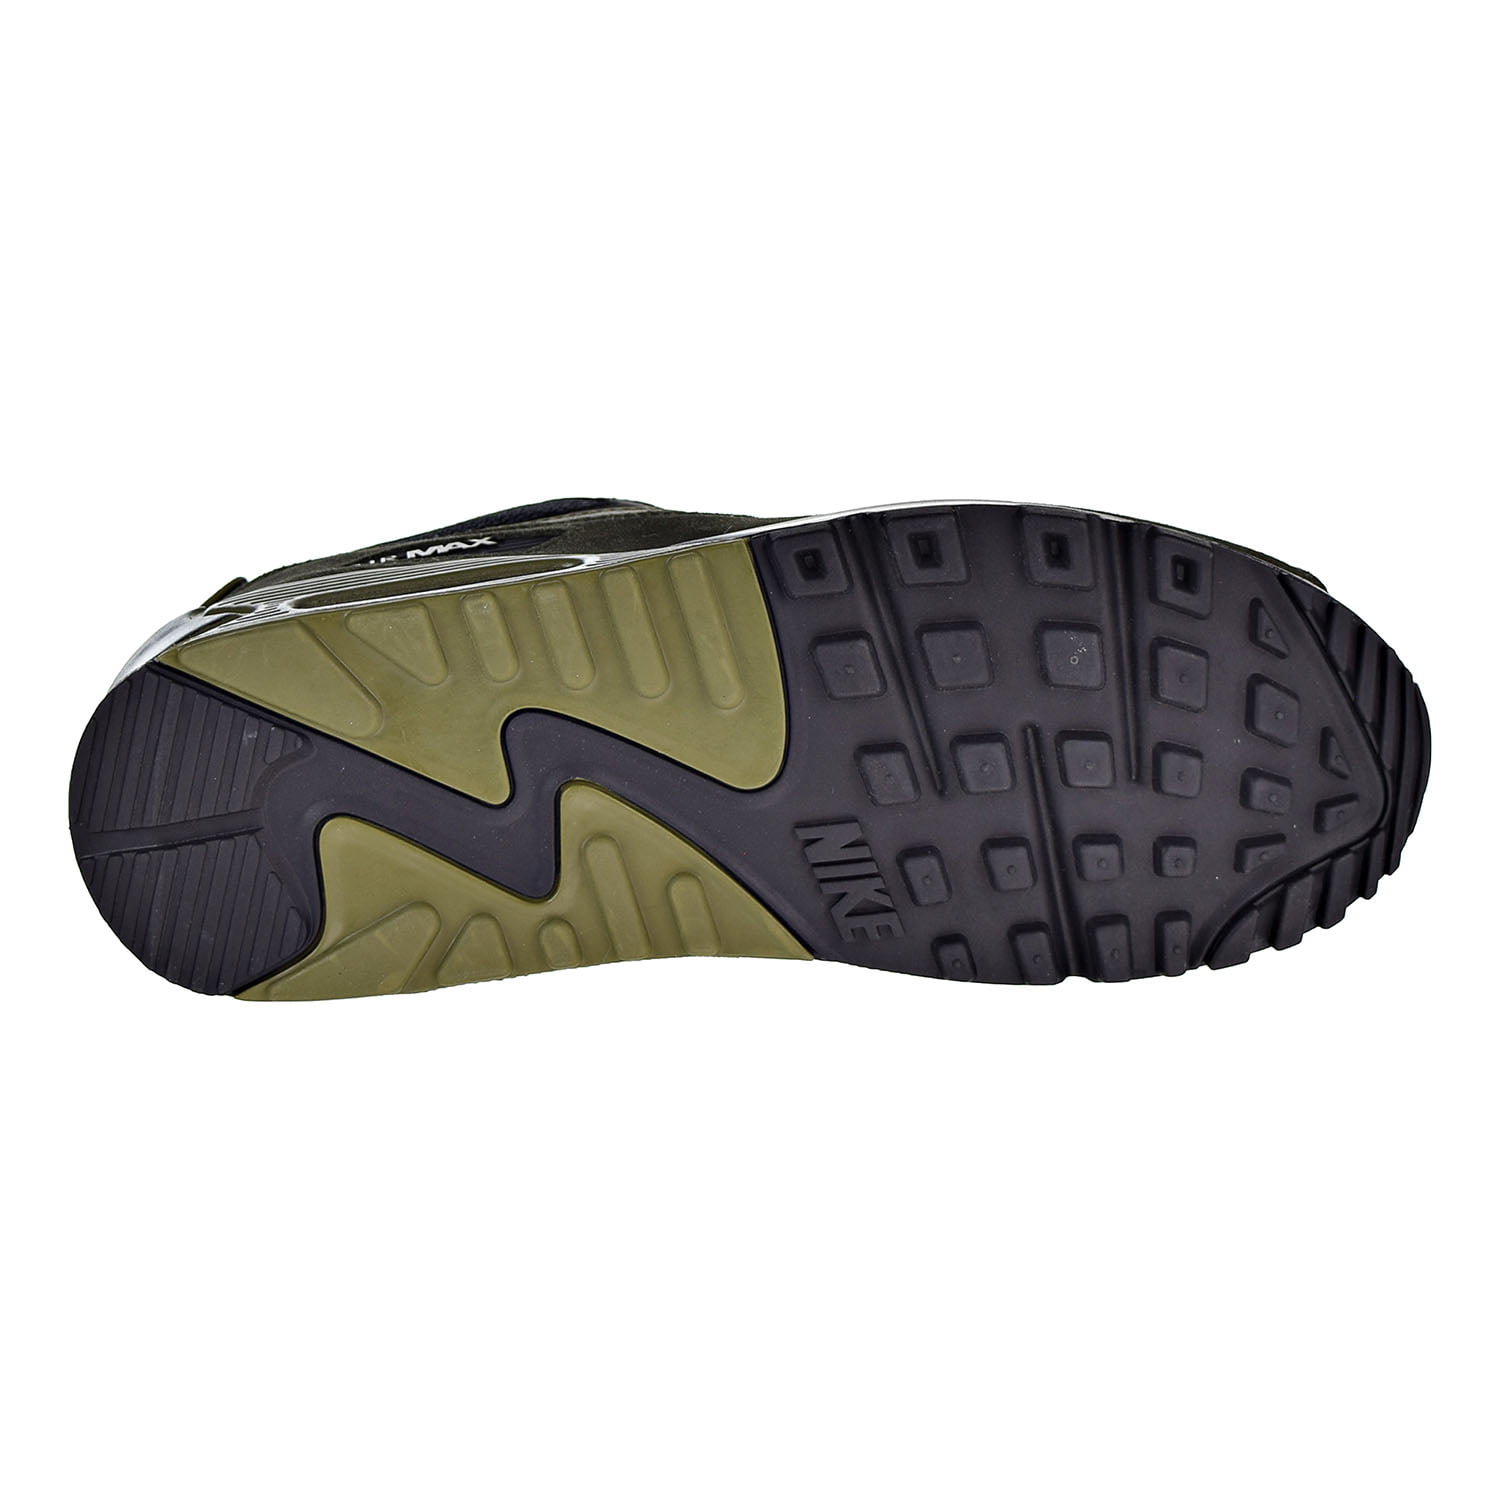 Nike Air Max 90 Leather Men's Shoes Black/Medium Olive-Sequoia 302519-014